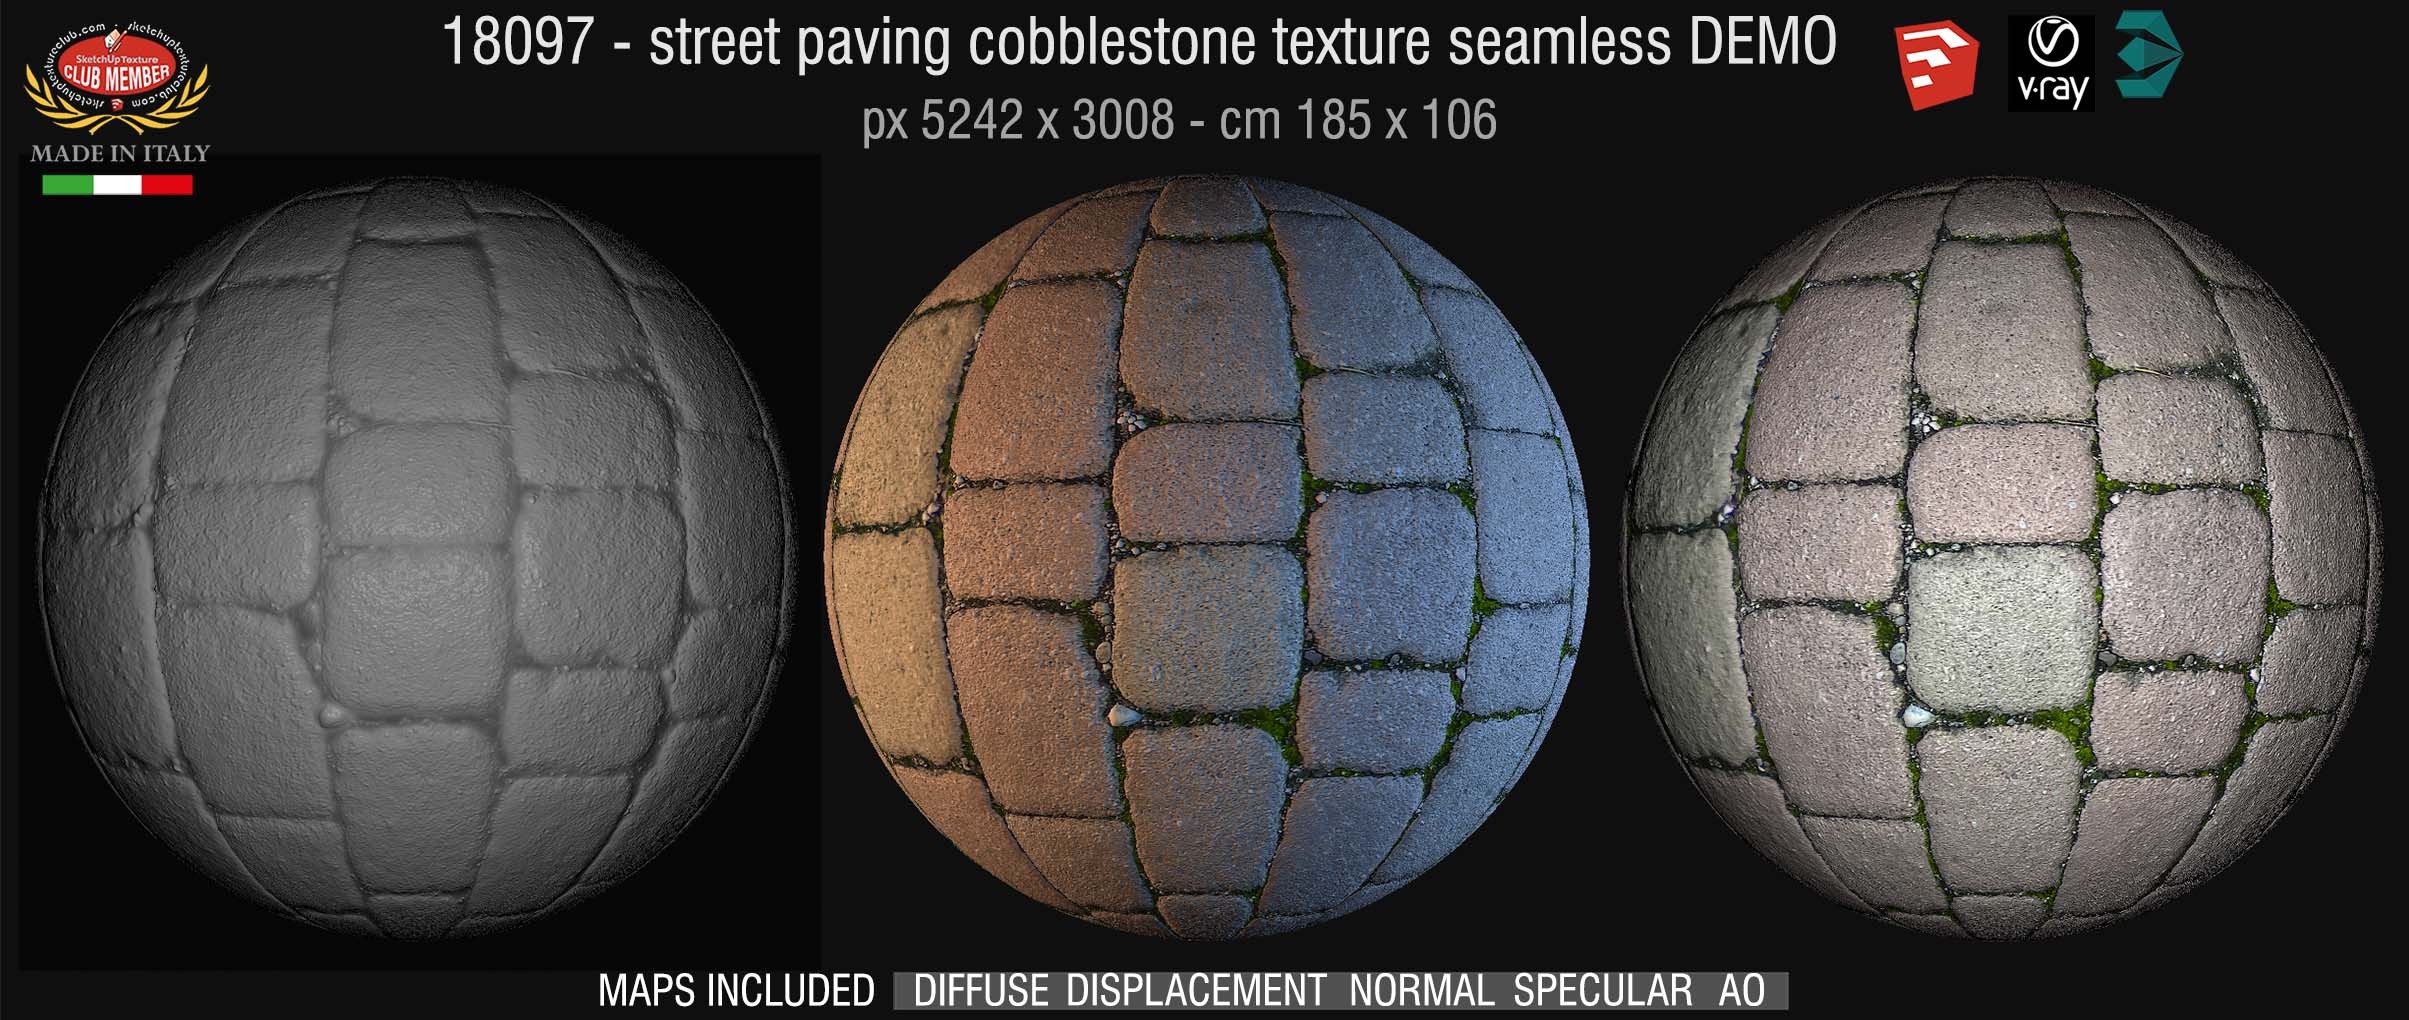 18097 HR  Street paving cobblestone texture seamless + maps DEMO